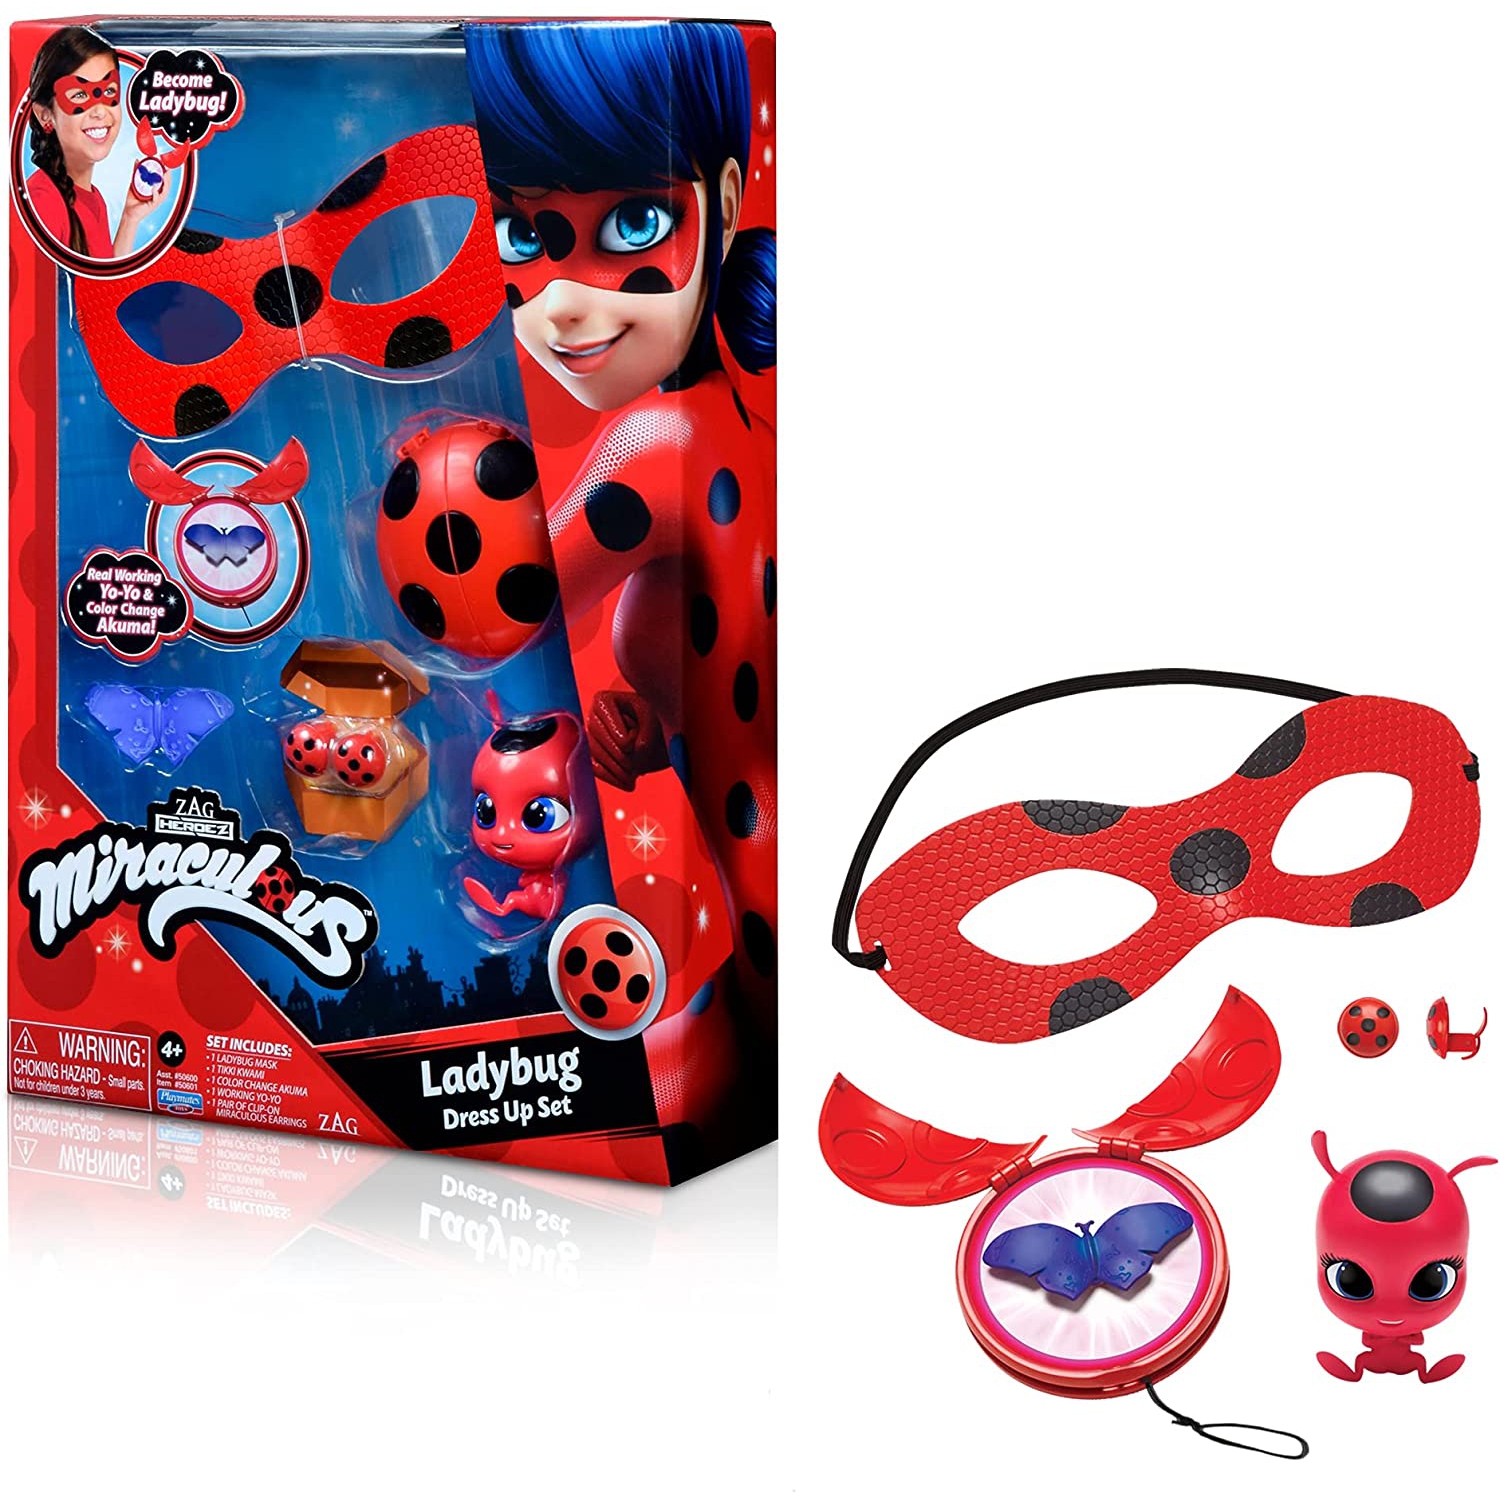 Miraculous Ladybug Dress Up Set with Yoyo, Color Change Akuma, kwami, mask and Earrings by Playmates Toys